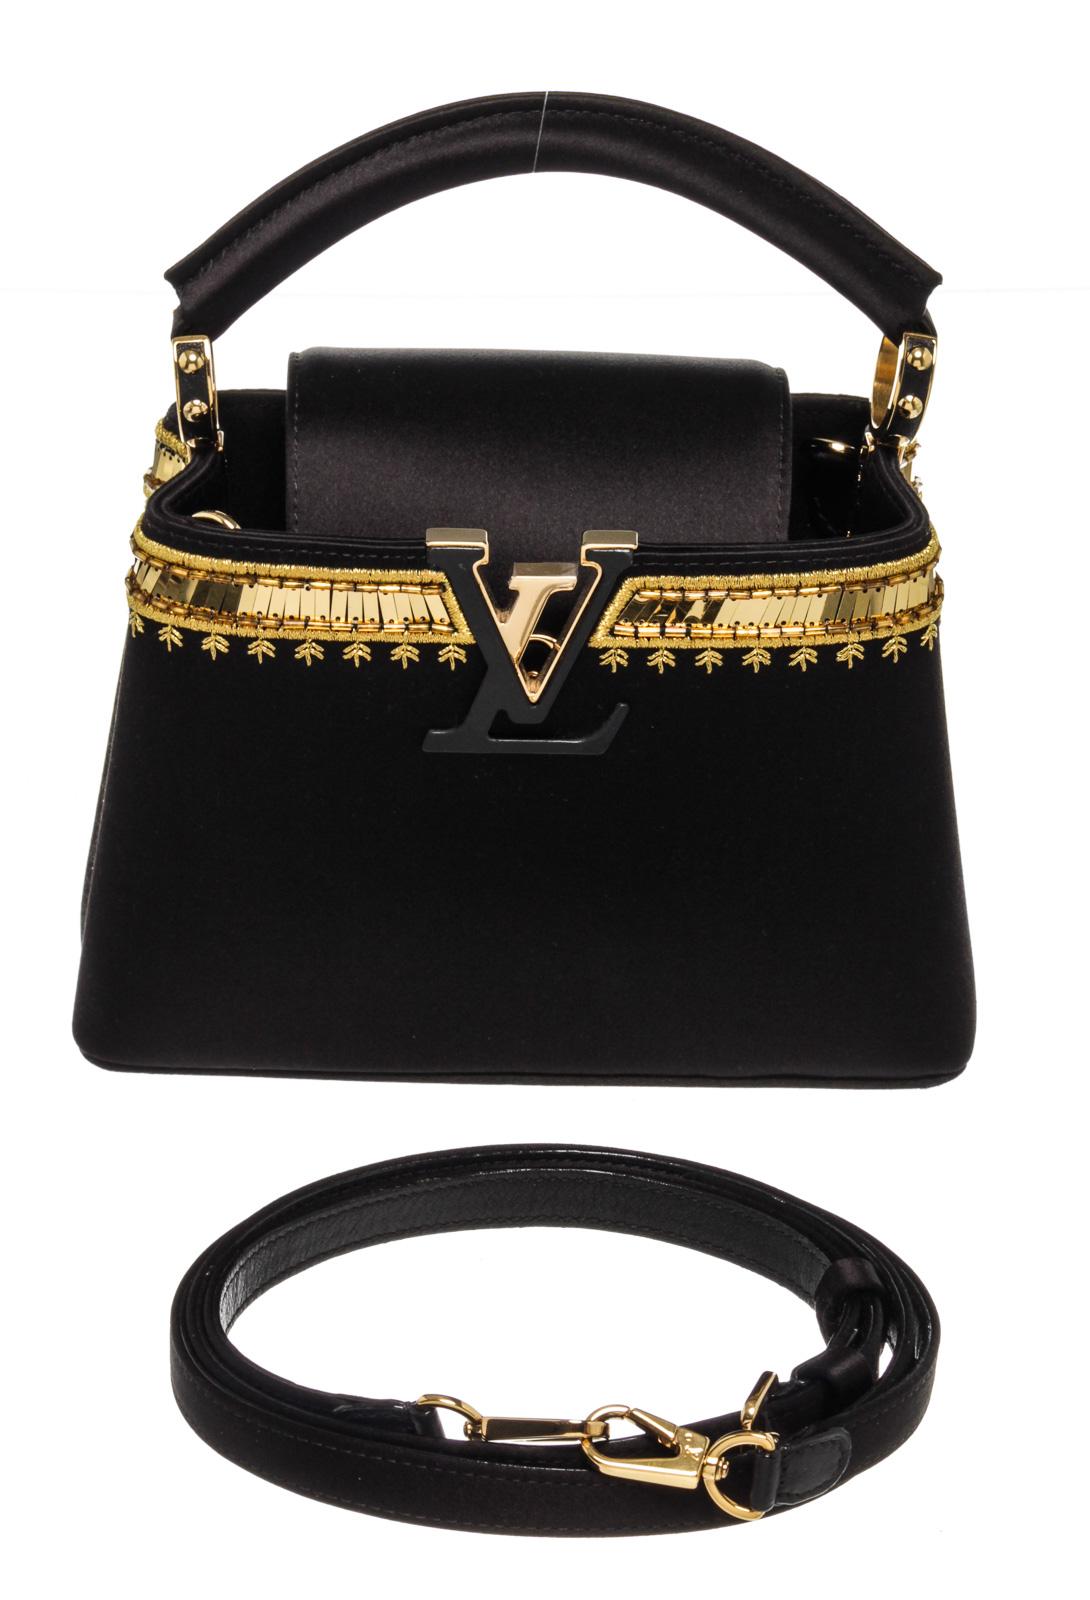 Louis Vuitton Black Leather Capucines Satin Handbag with leather, gold-tone hardware, leather trim, interior slip pocket, top handle and zipper closures.

50330MSCÂ